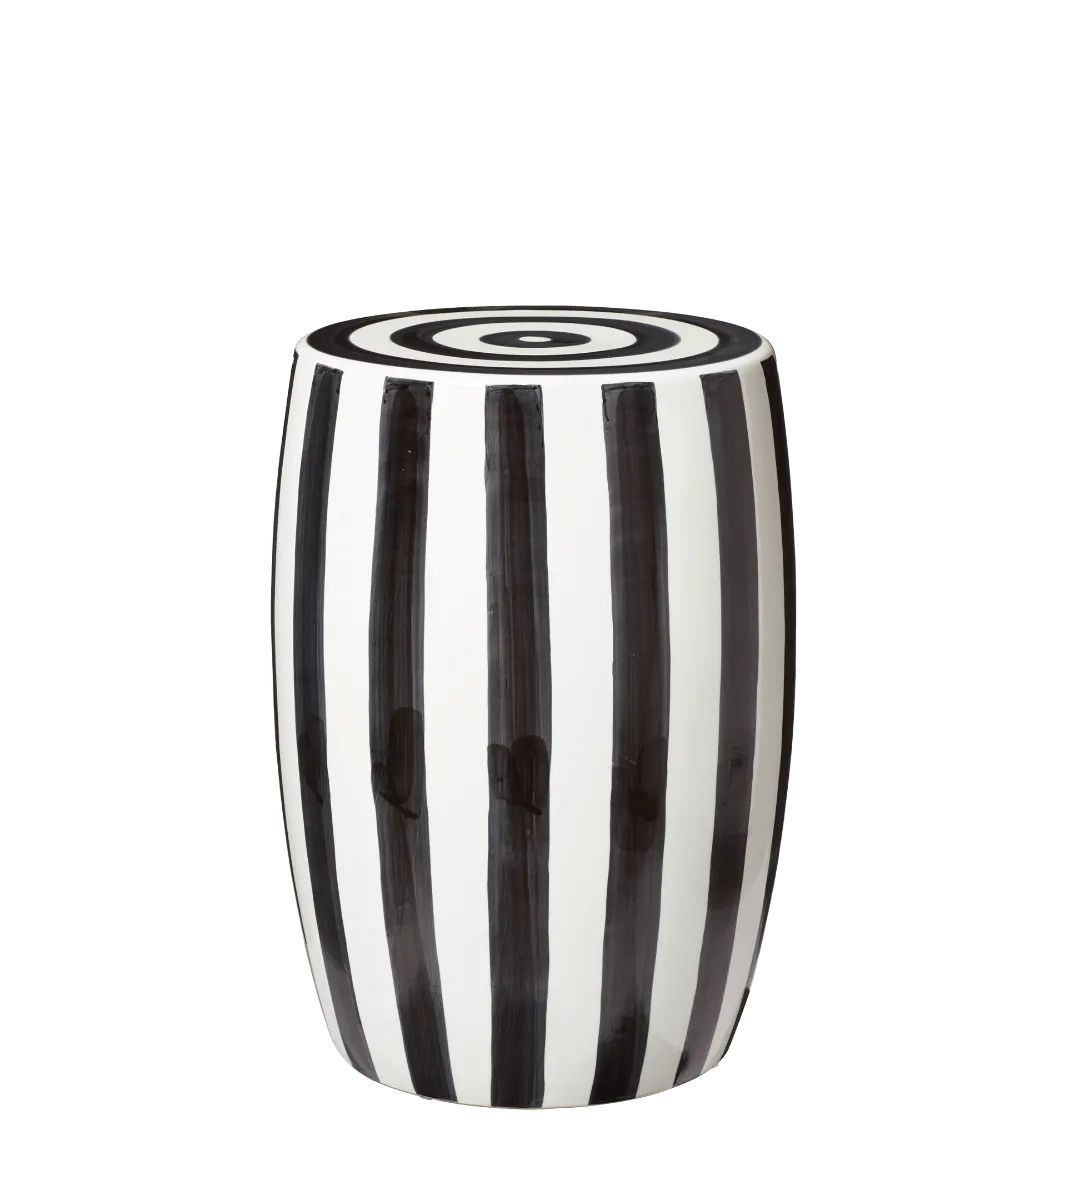 Rander Ceramic Stool - Black/White | OKA US